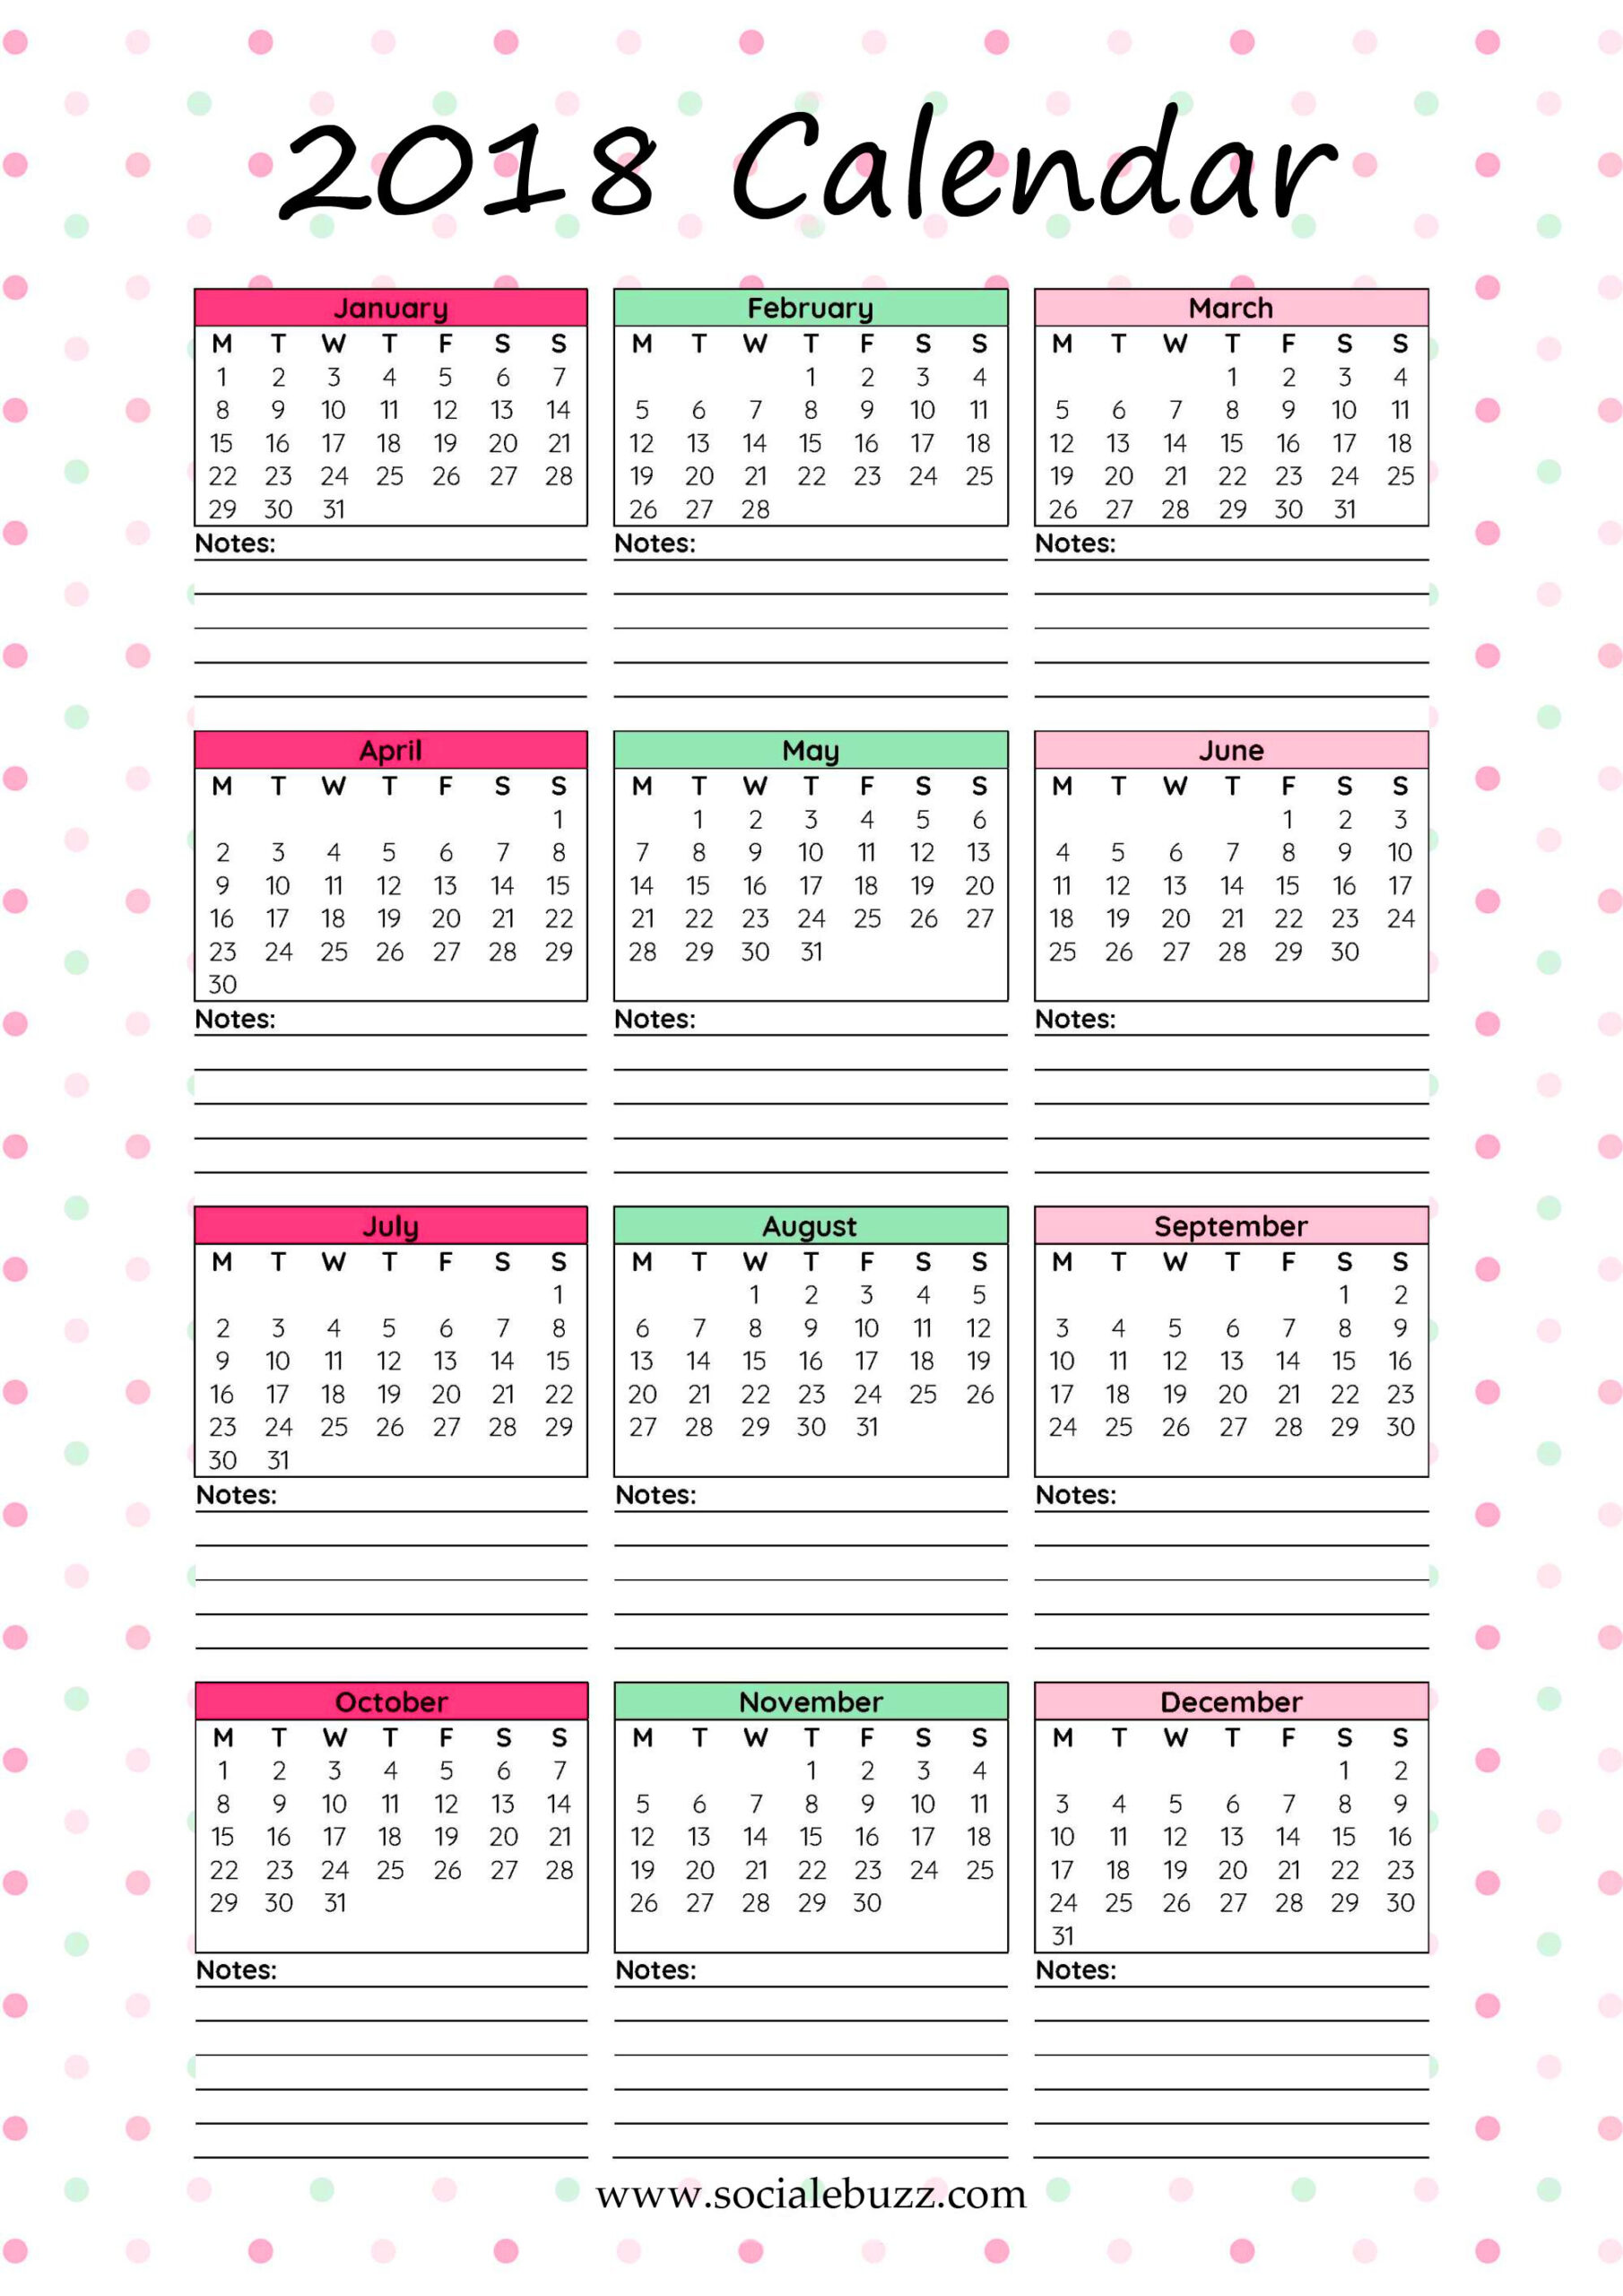 Free 2018 Calendar Printable Http:socialebuzz2018 throughout Blank Year At A Glance Calendar